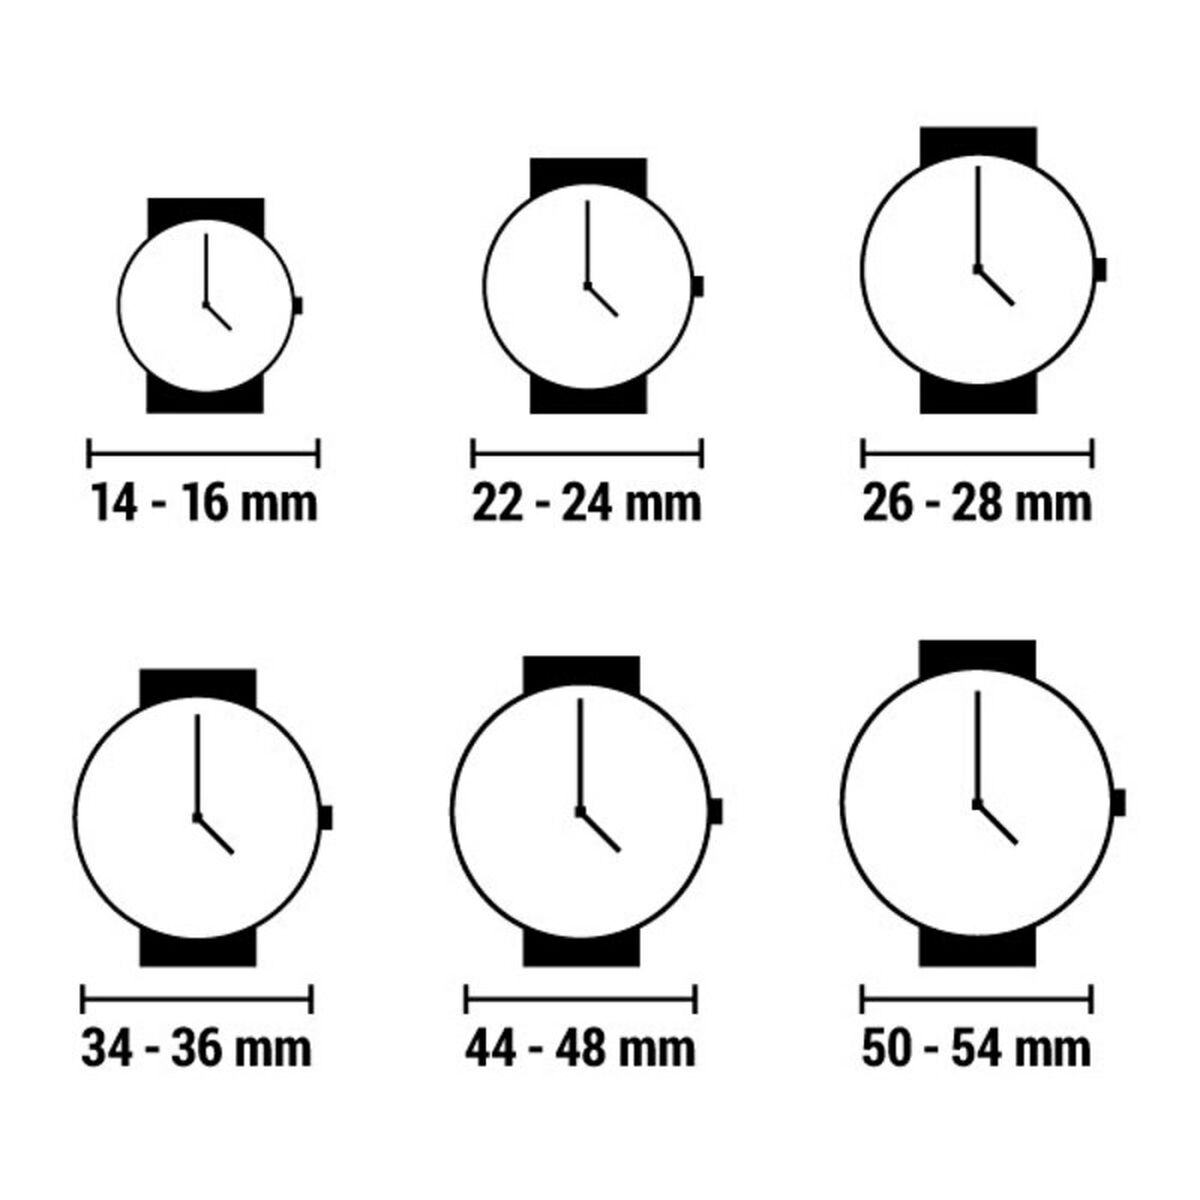 Horloge Heren Guess W0660G2 (Ø 43 mm)